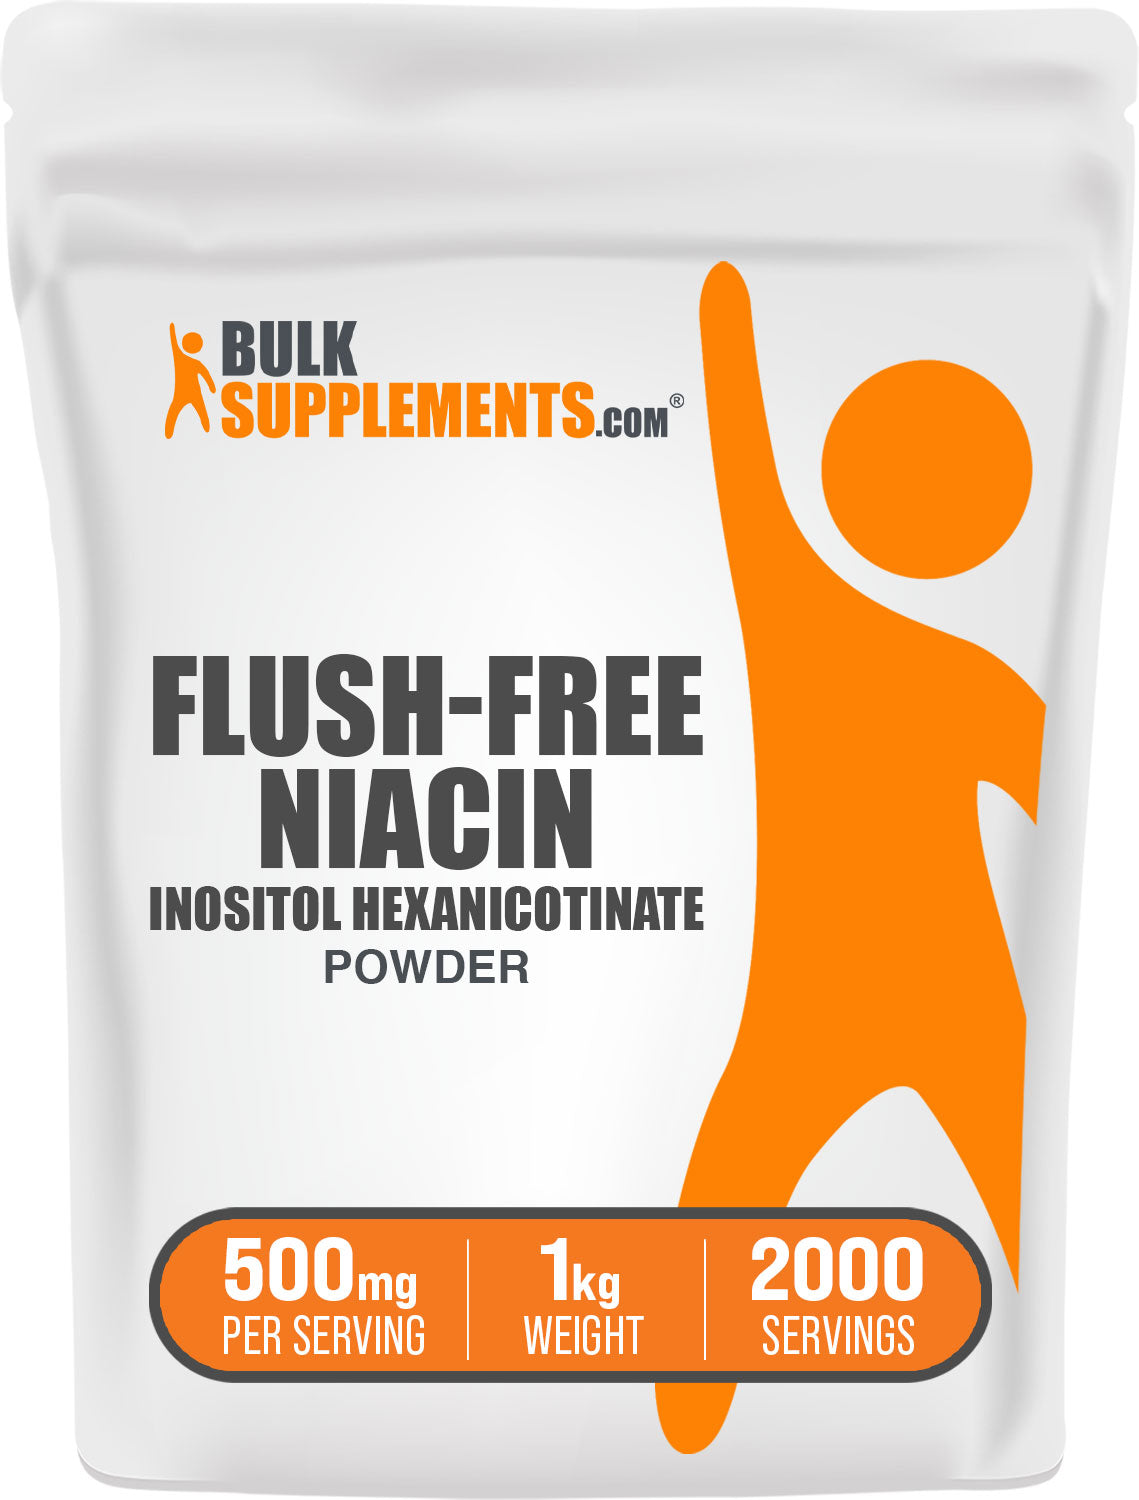 BulkSupplements.com Flush-Free Niacin Powder 1kg bag